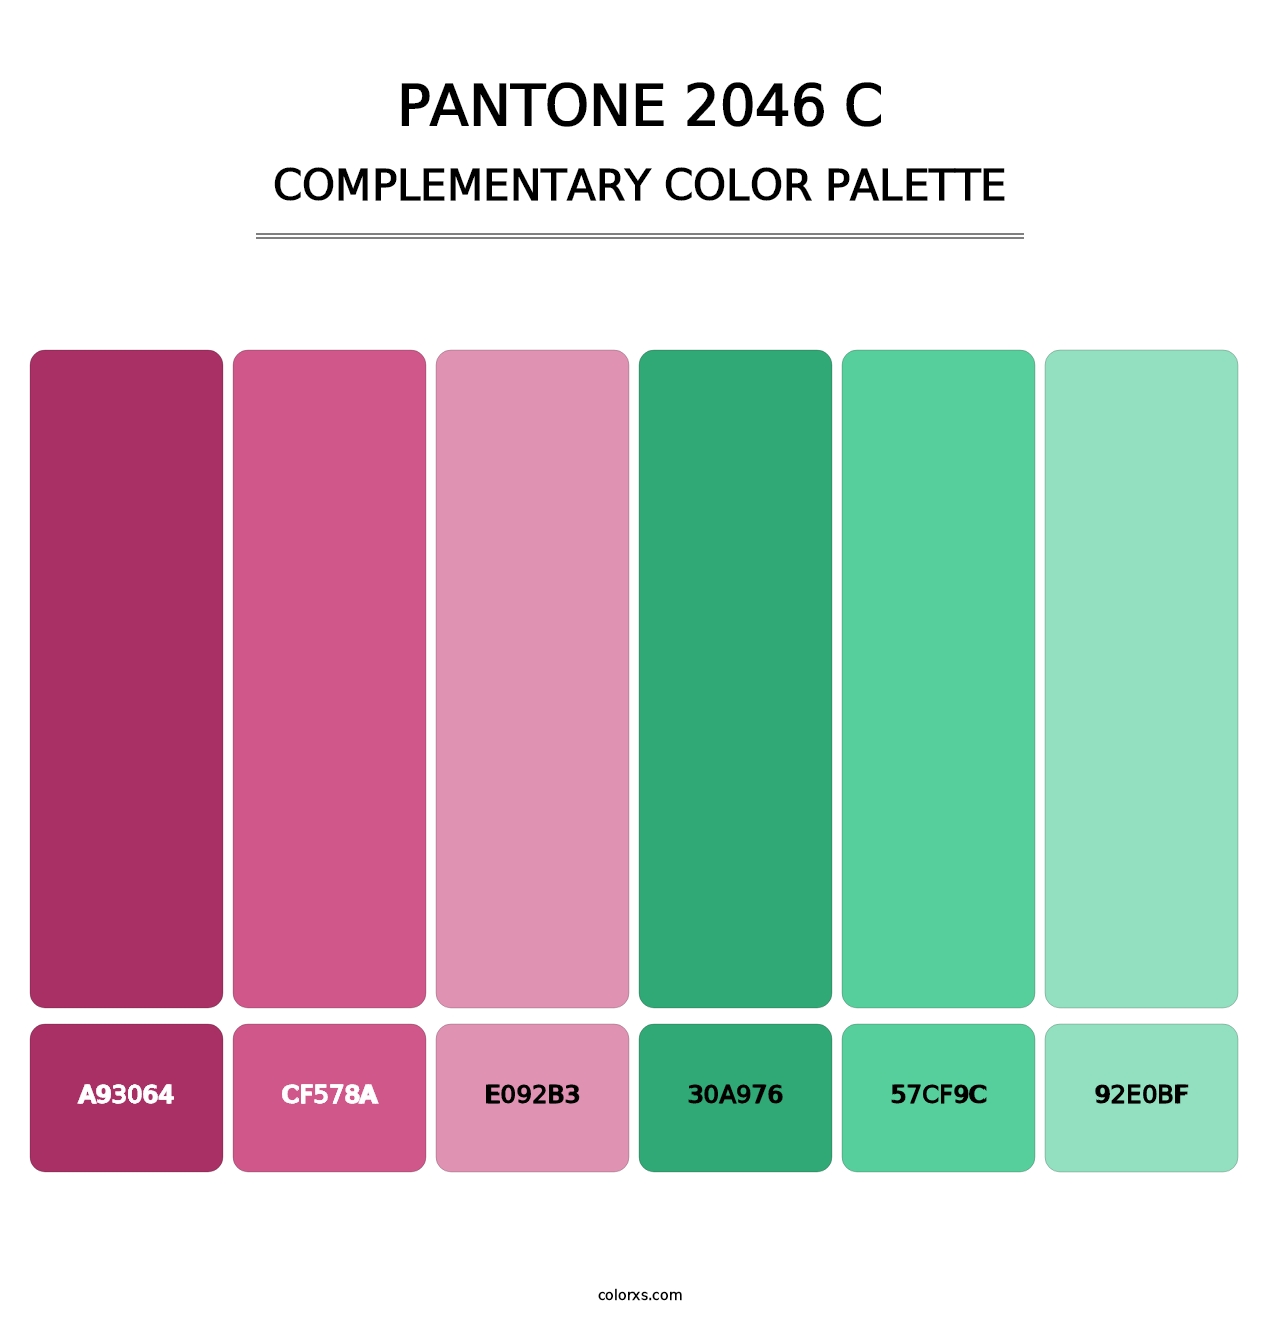 PANTONE 2046 C - Complementary Color Palette